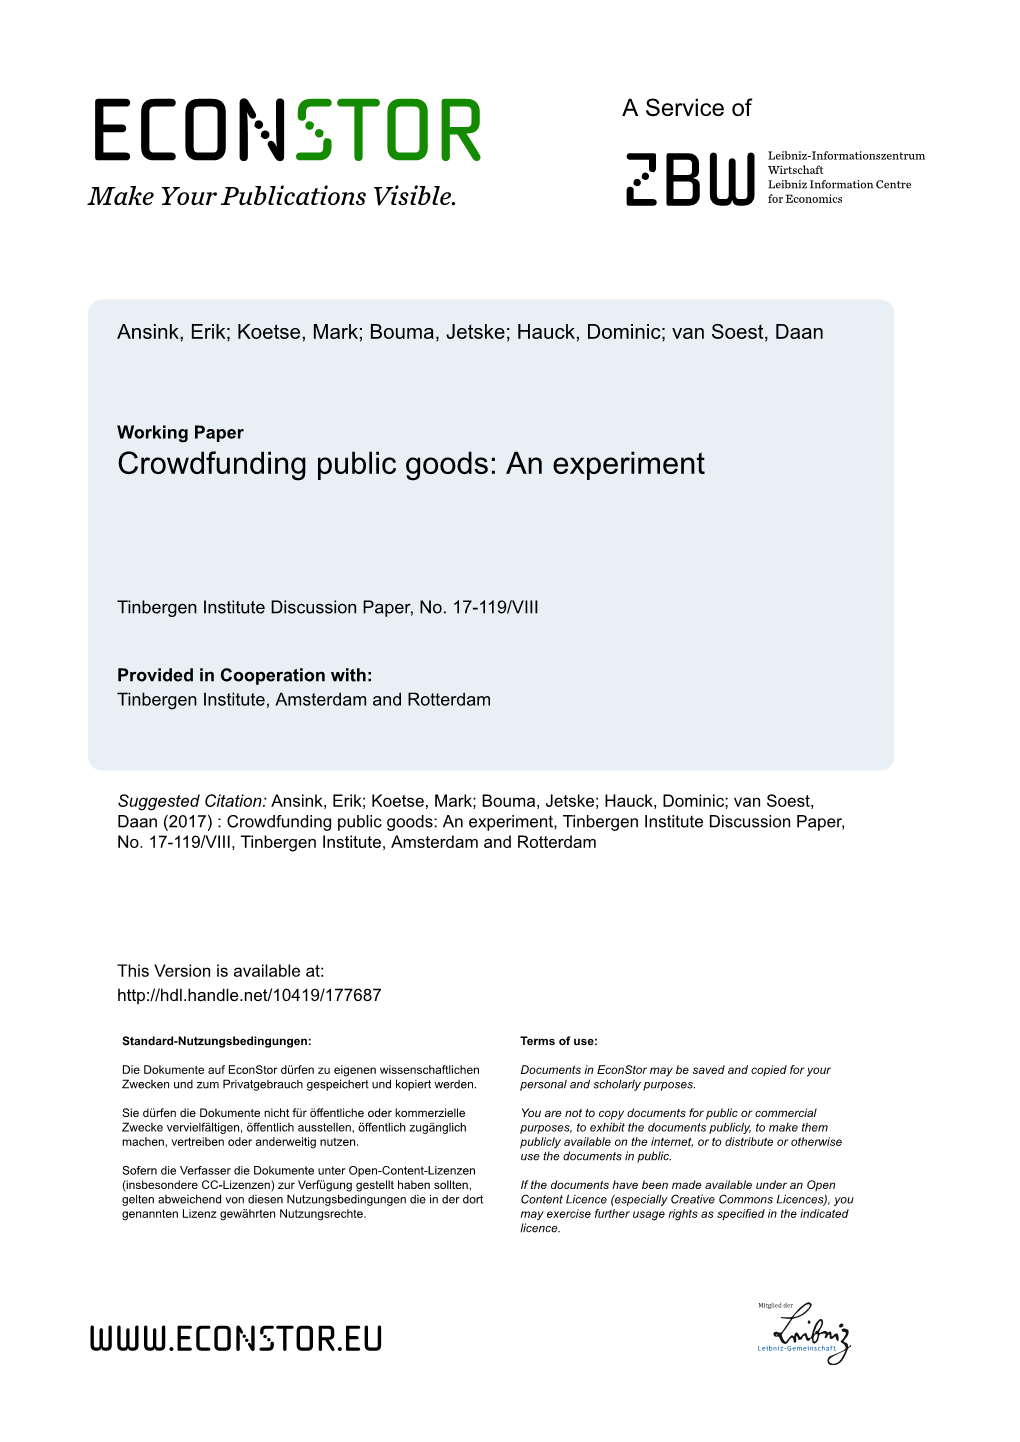 Crowdfunding Public Goods: an Experiment